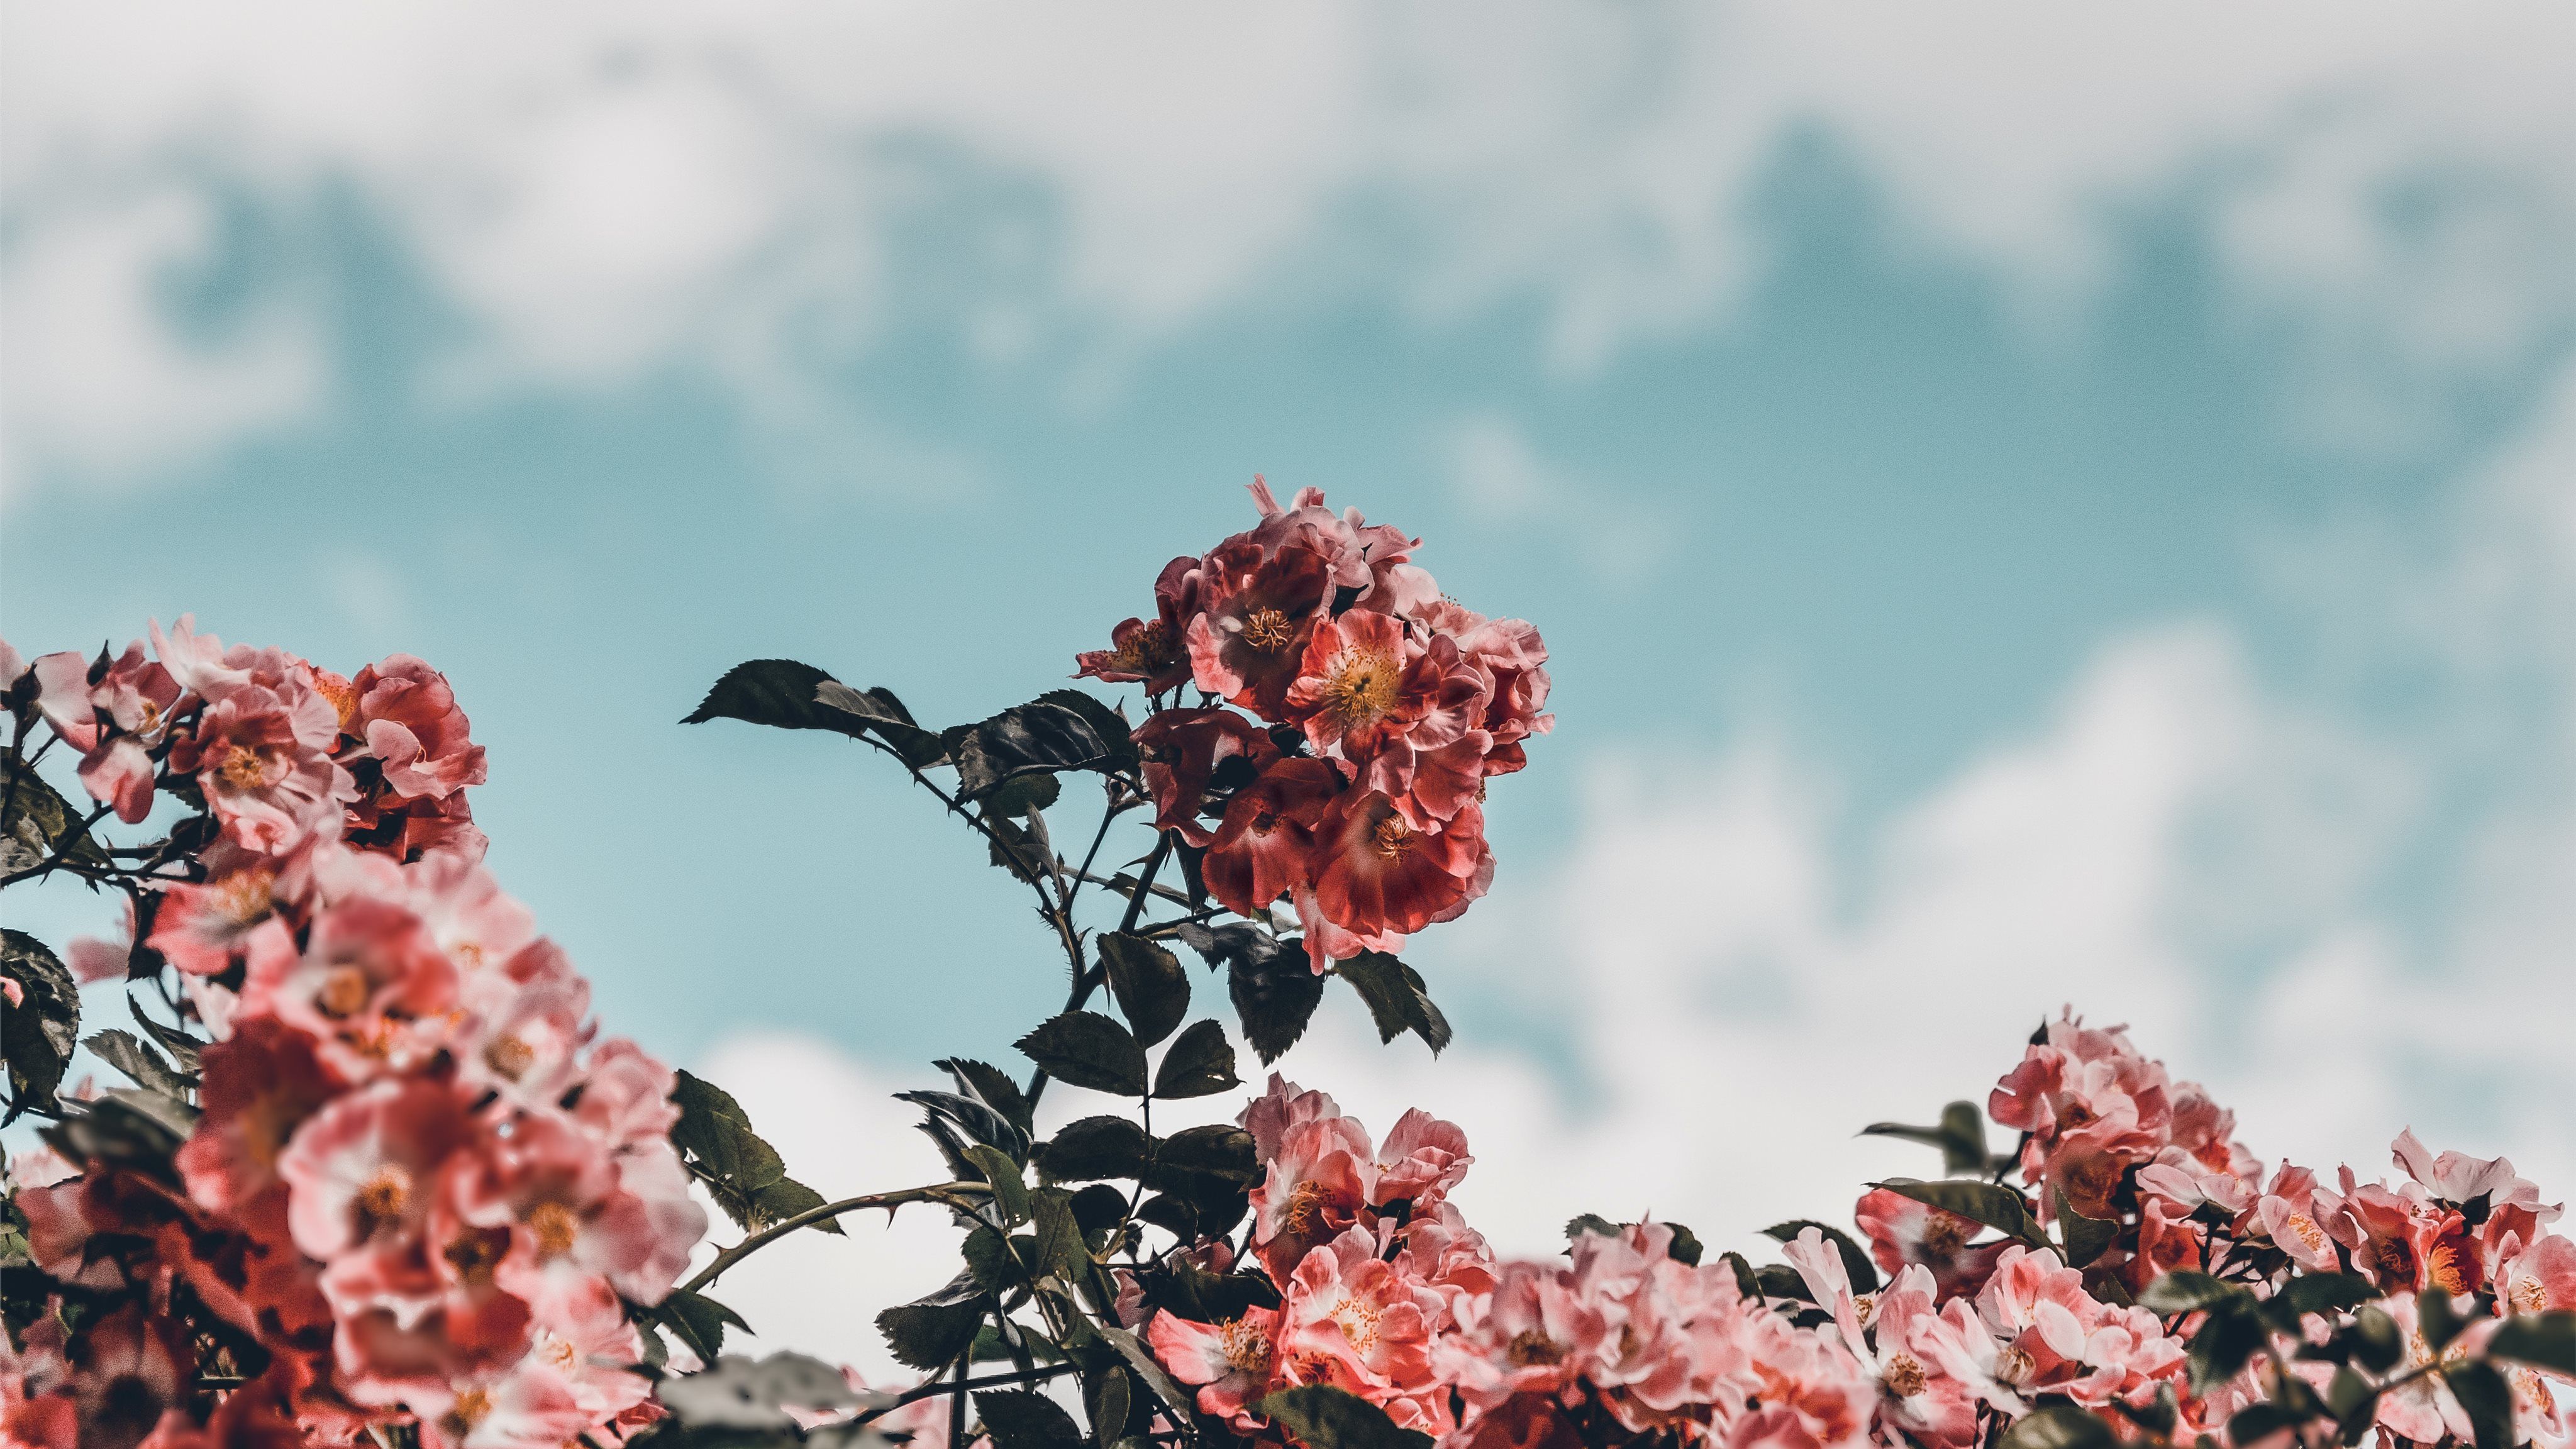 Pink flowers against a blue sky - IMac